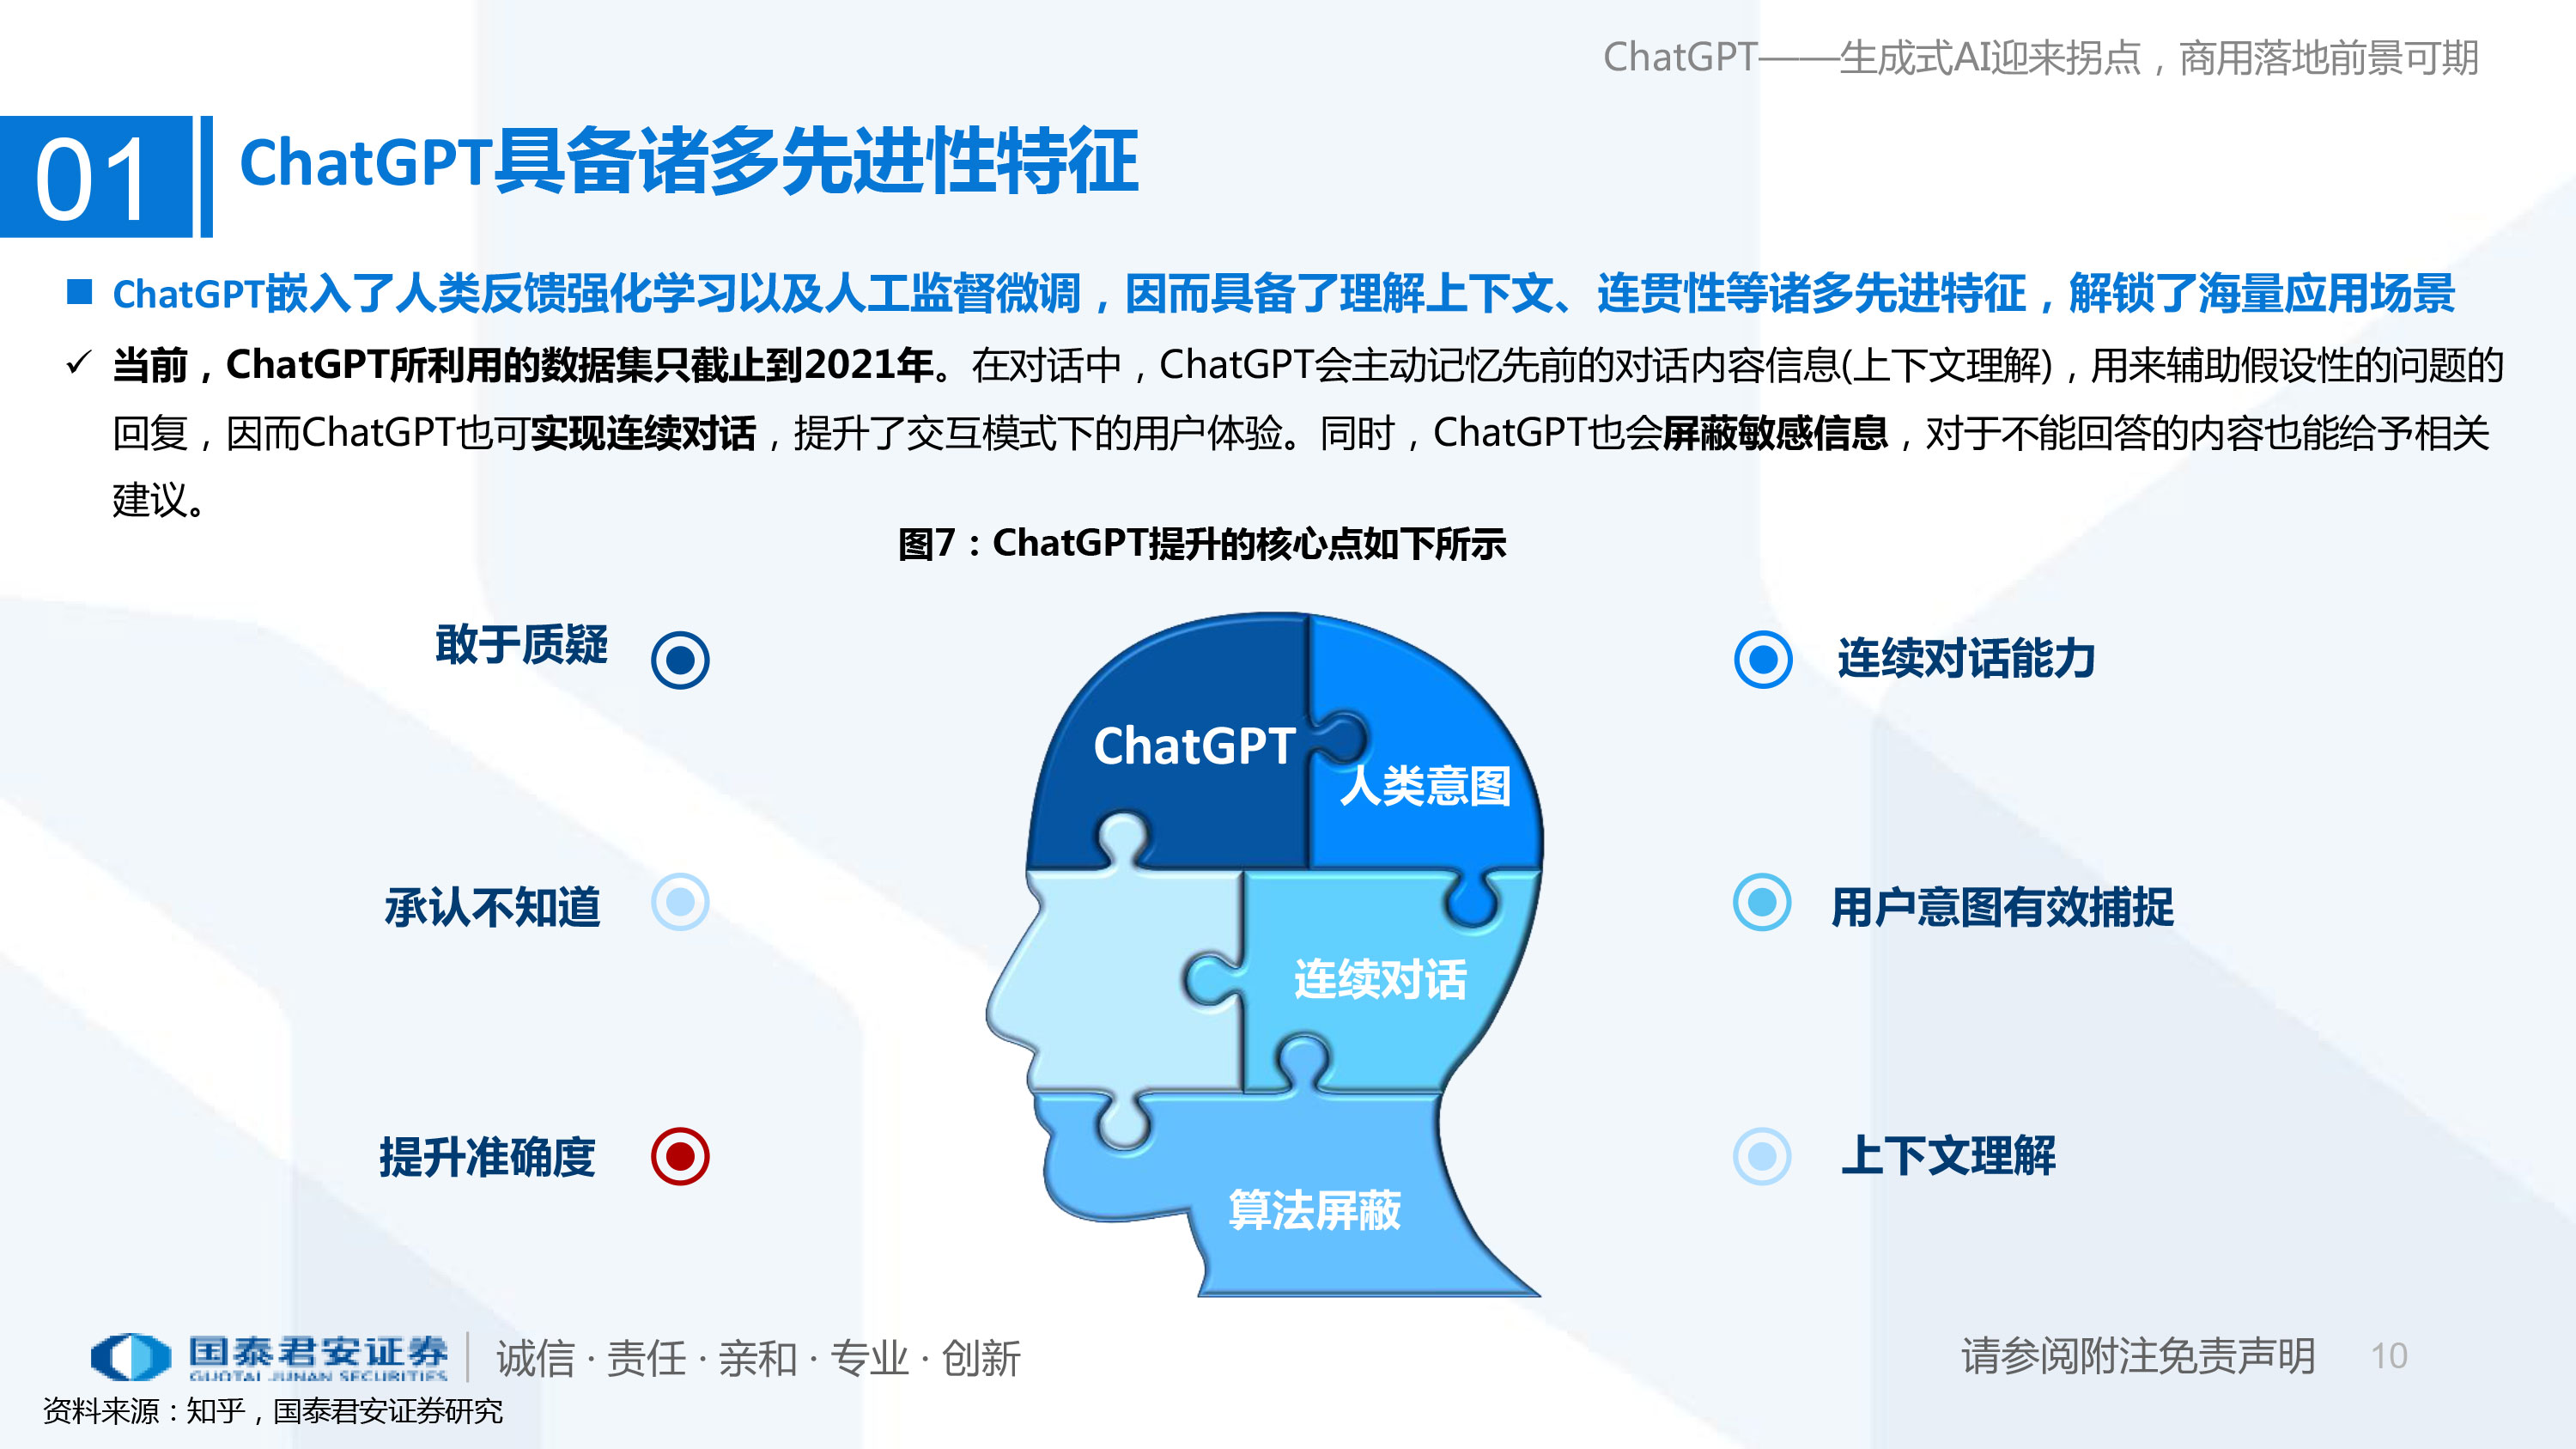 ChatGPT 商业落地迅速,助力 AI应用场景大幅延展